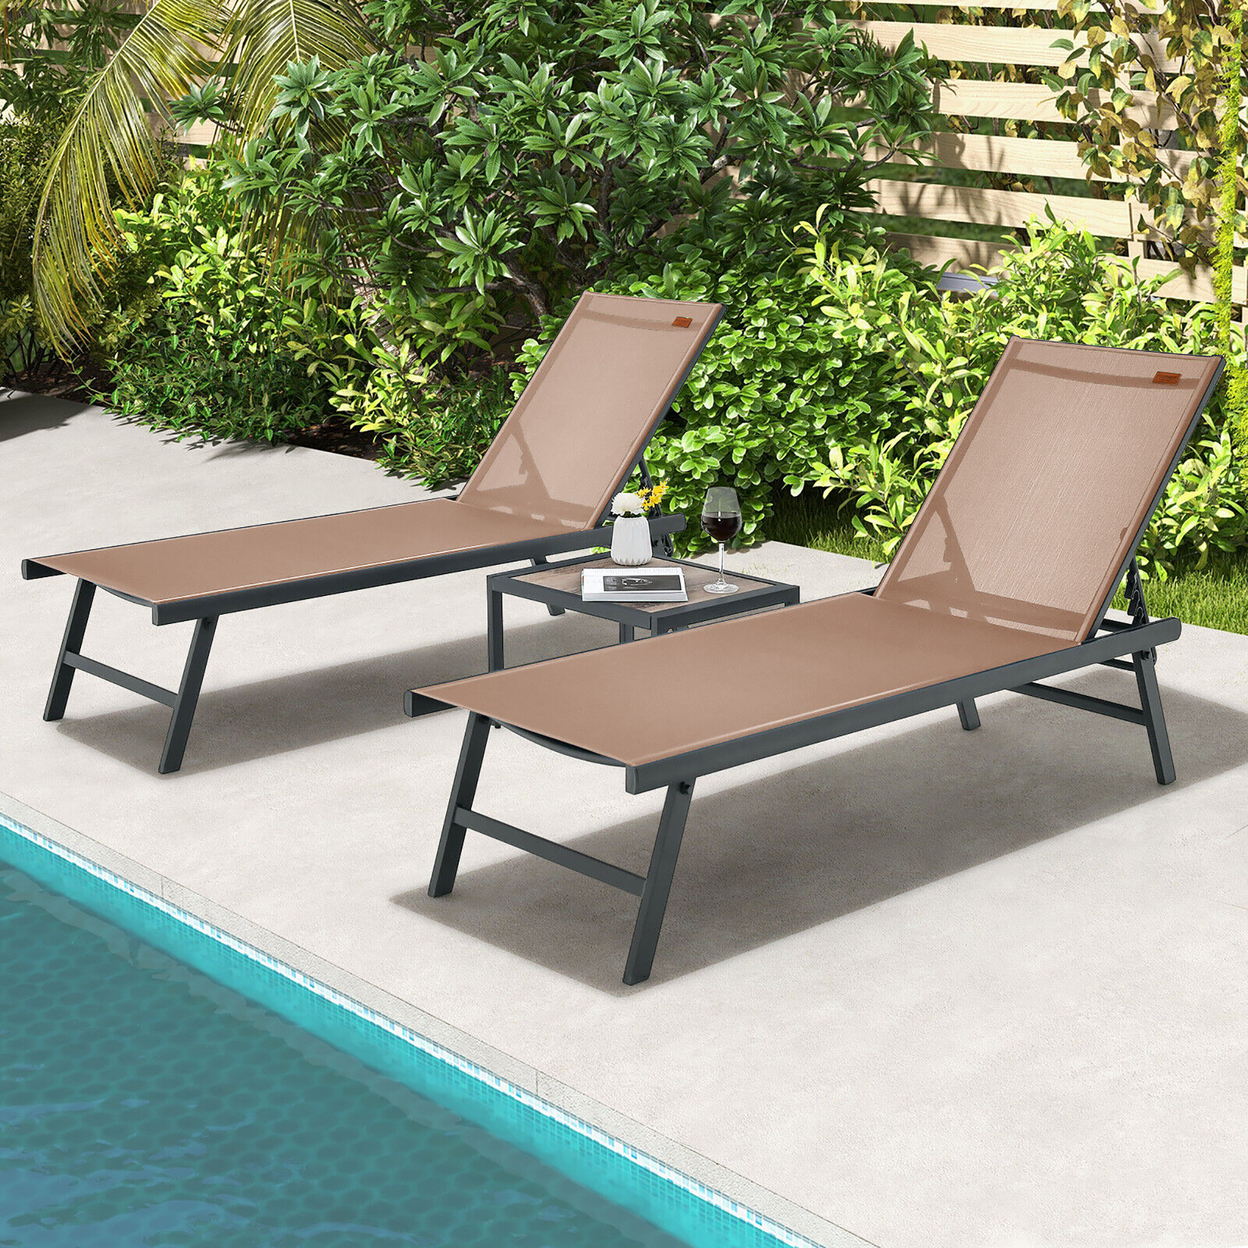 3pcs Patio Chaise Lounge Set Aluminum Recliner Chair Table Outdoor Adjust - Tan